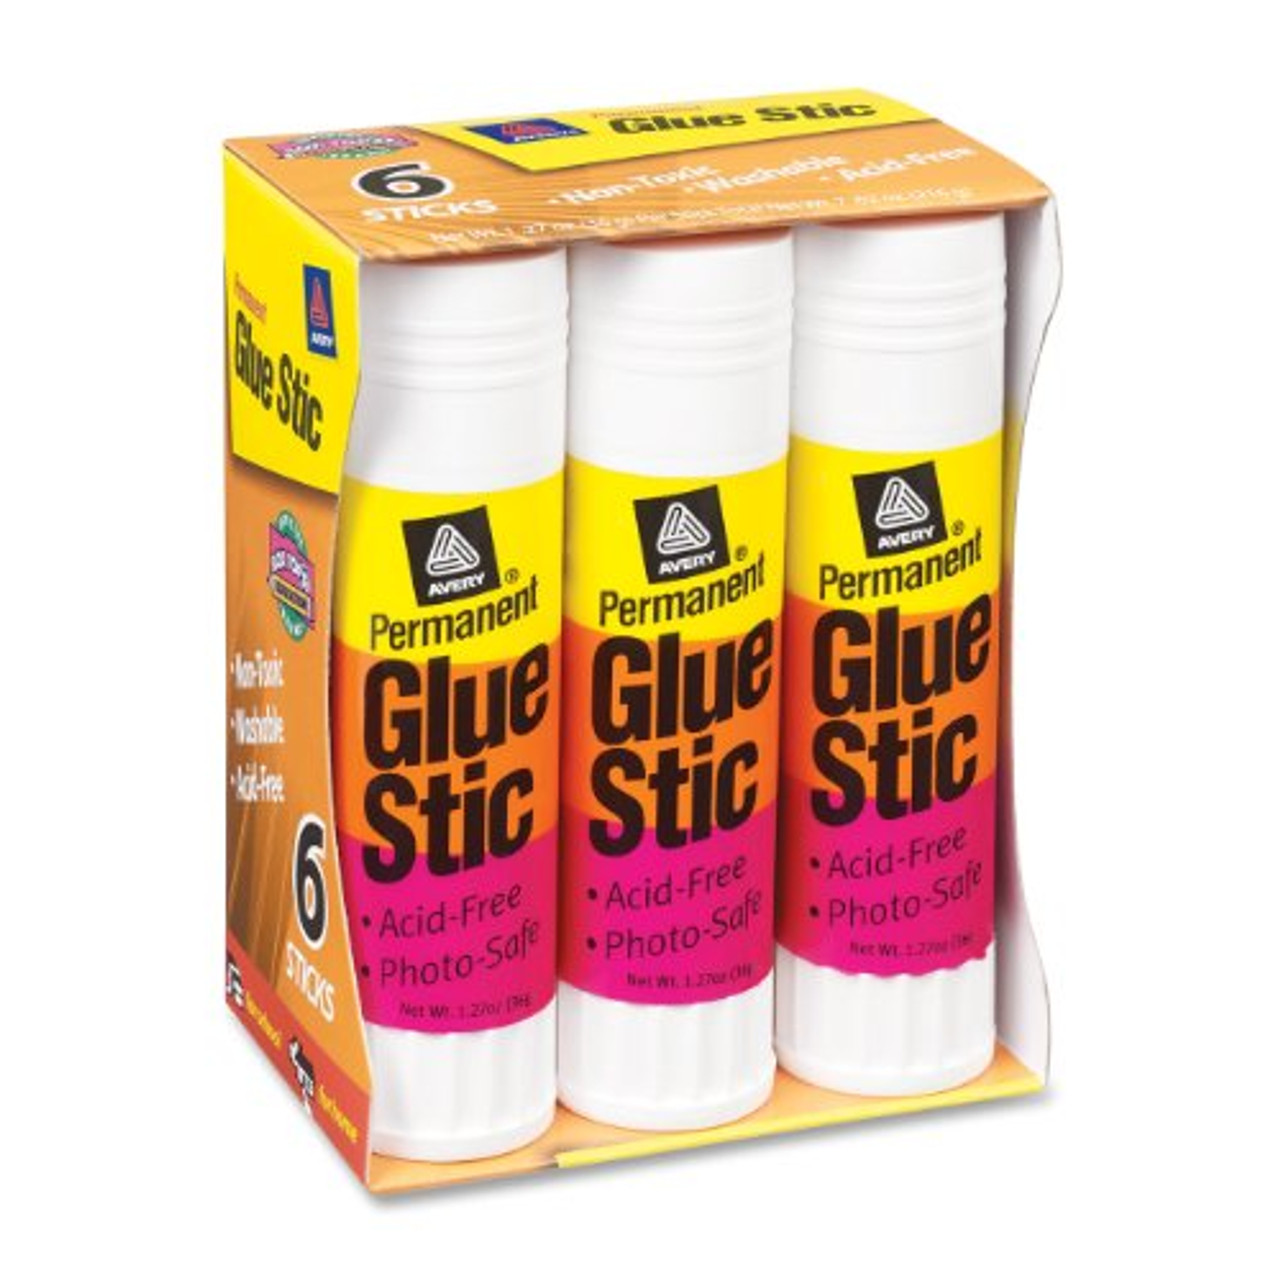 Avery® Glue Stick - 1.27 oz - 6 / Pack - White